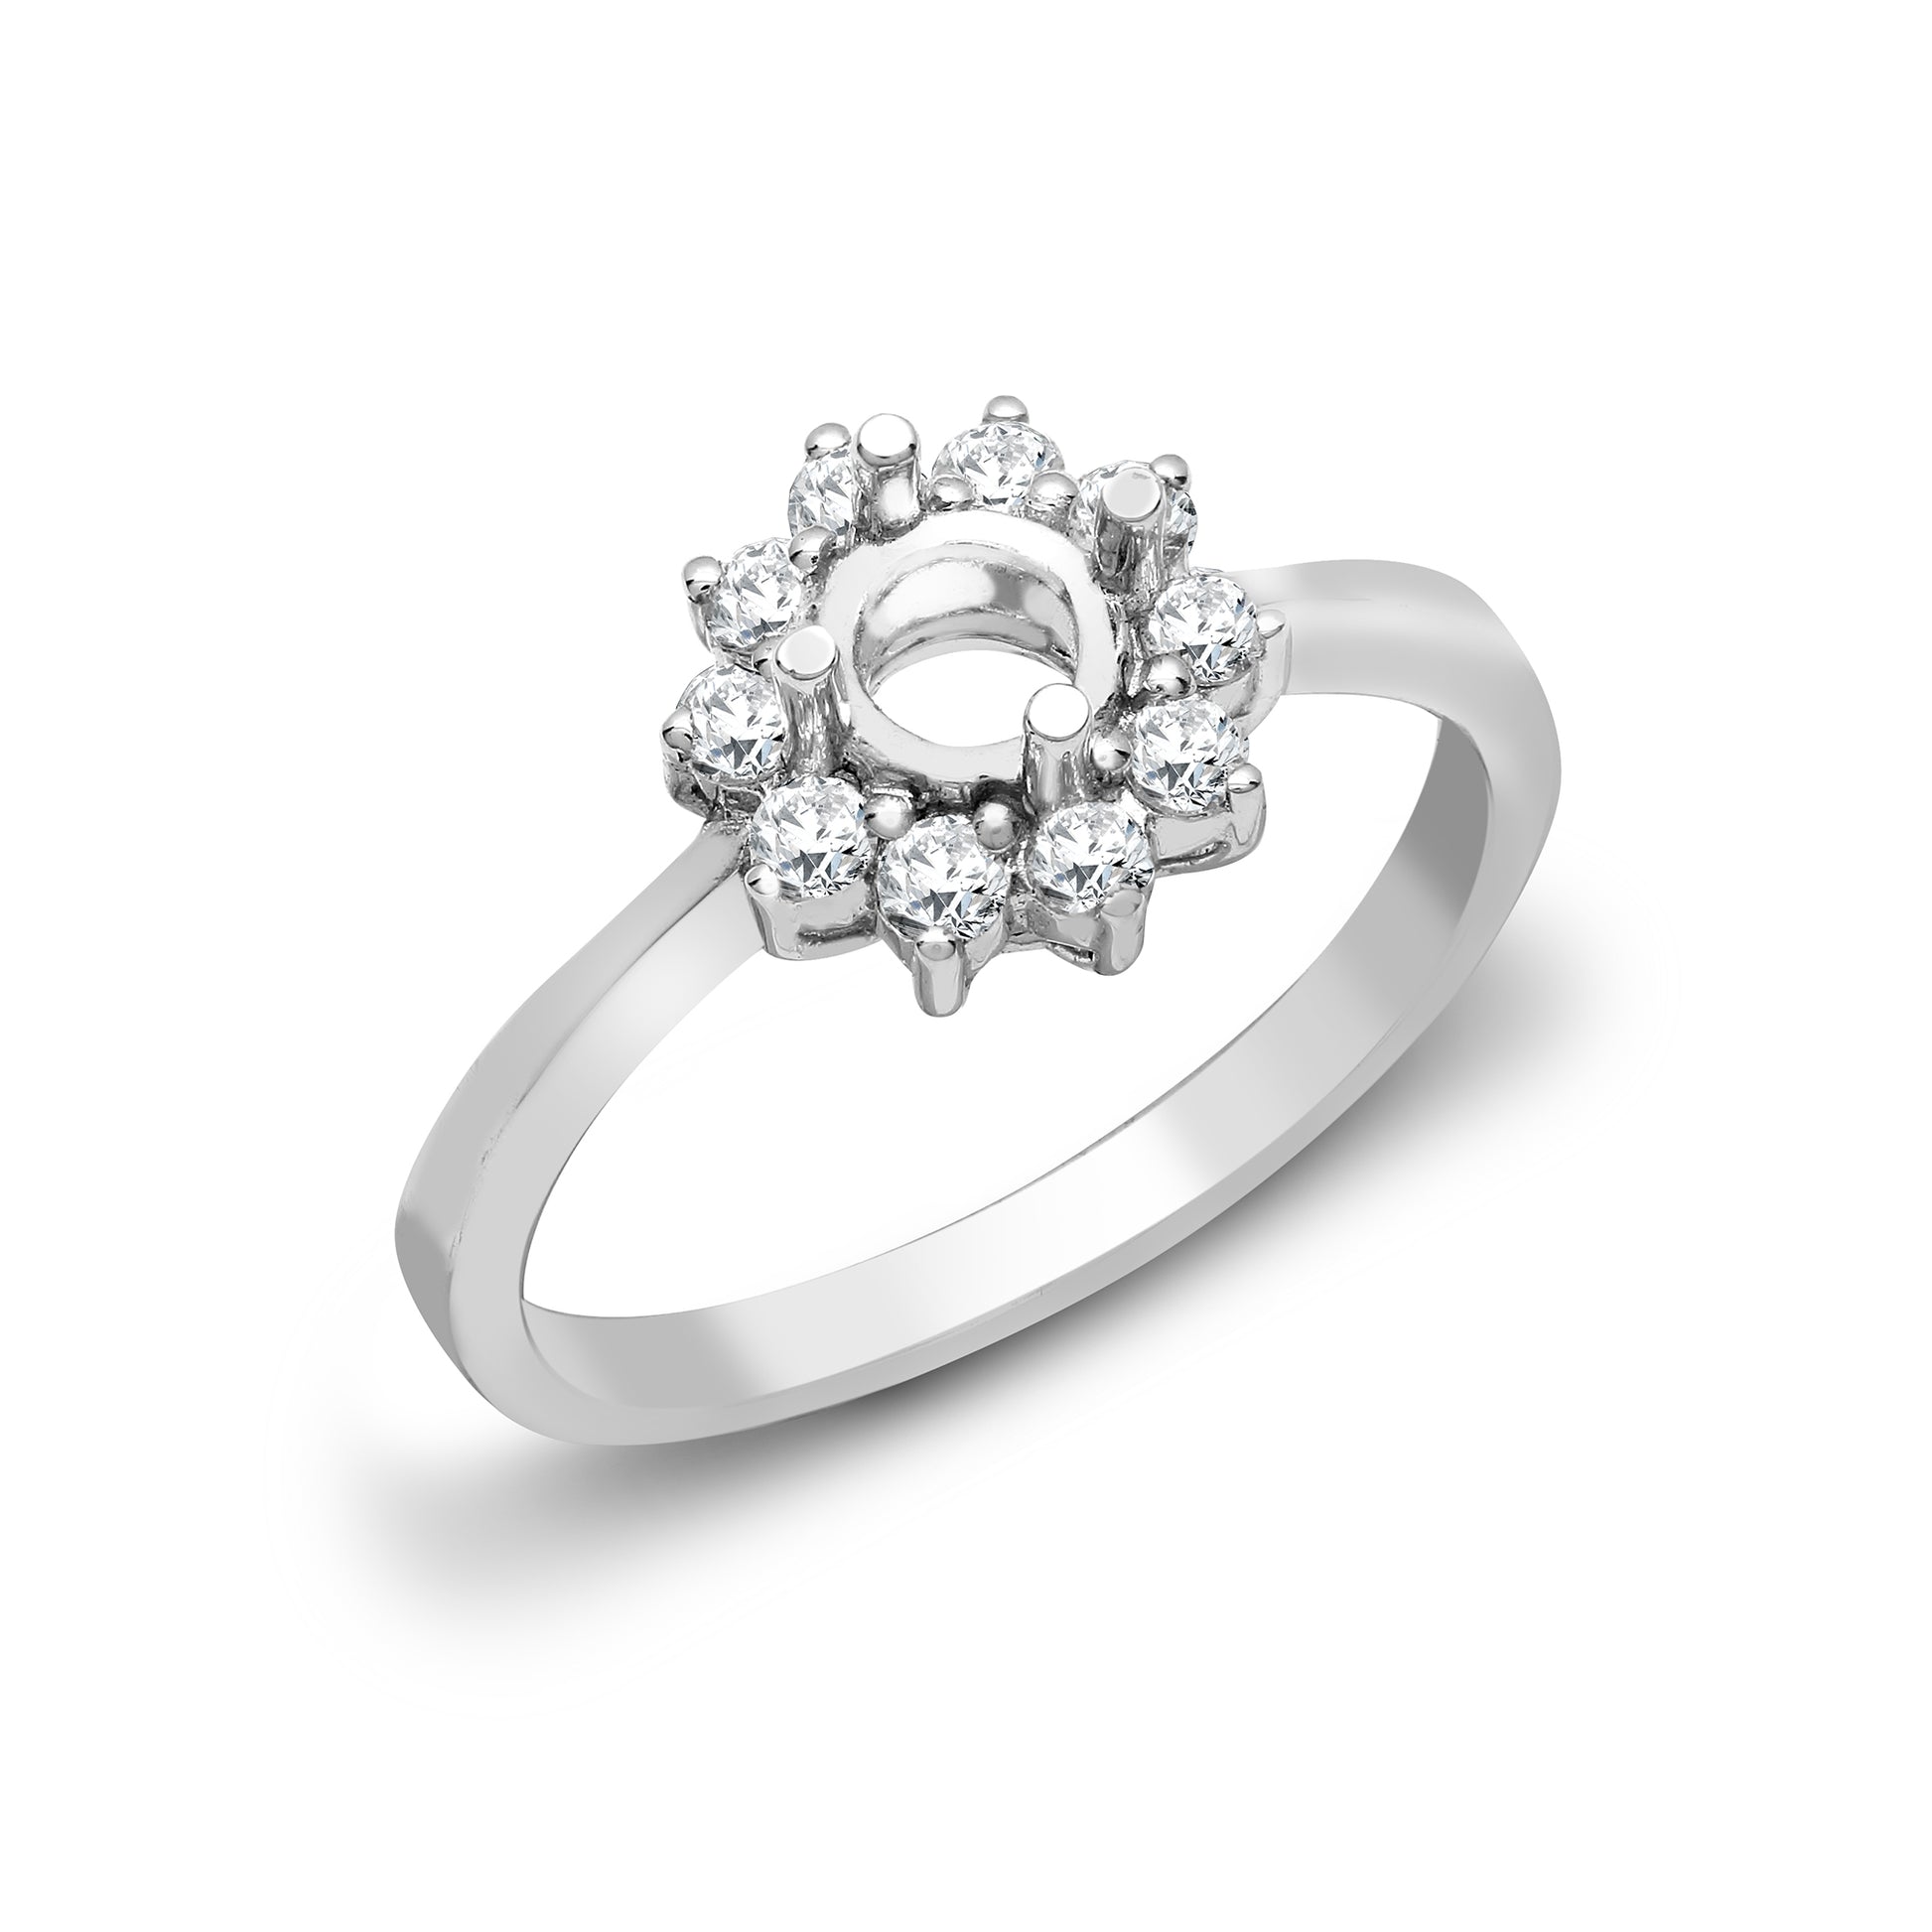 18ct White Gold  0.4ct Diamond Semi Set Mount Engagement Ring 10mm - 18R521-100